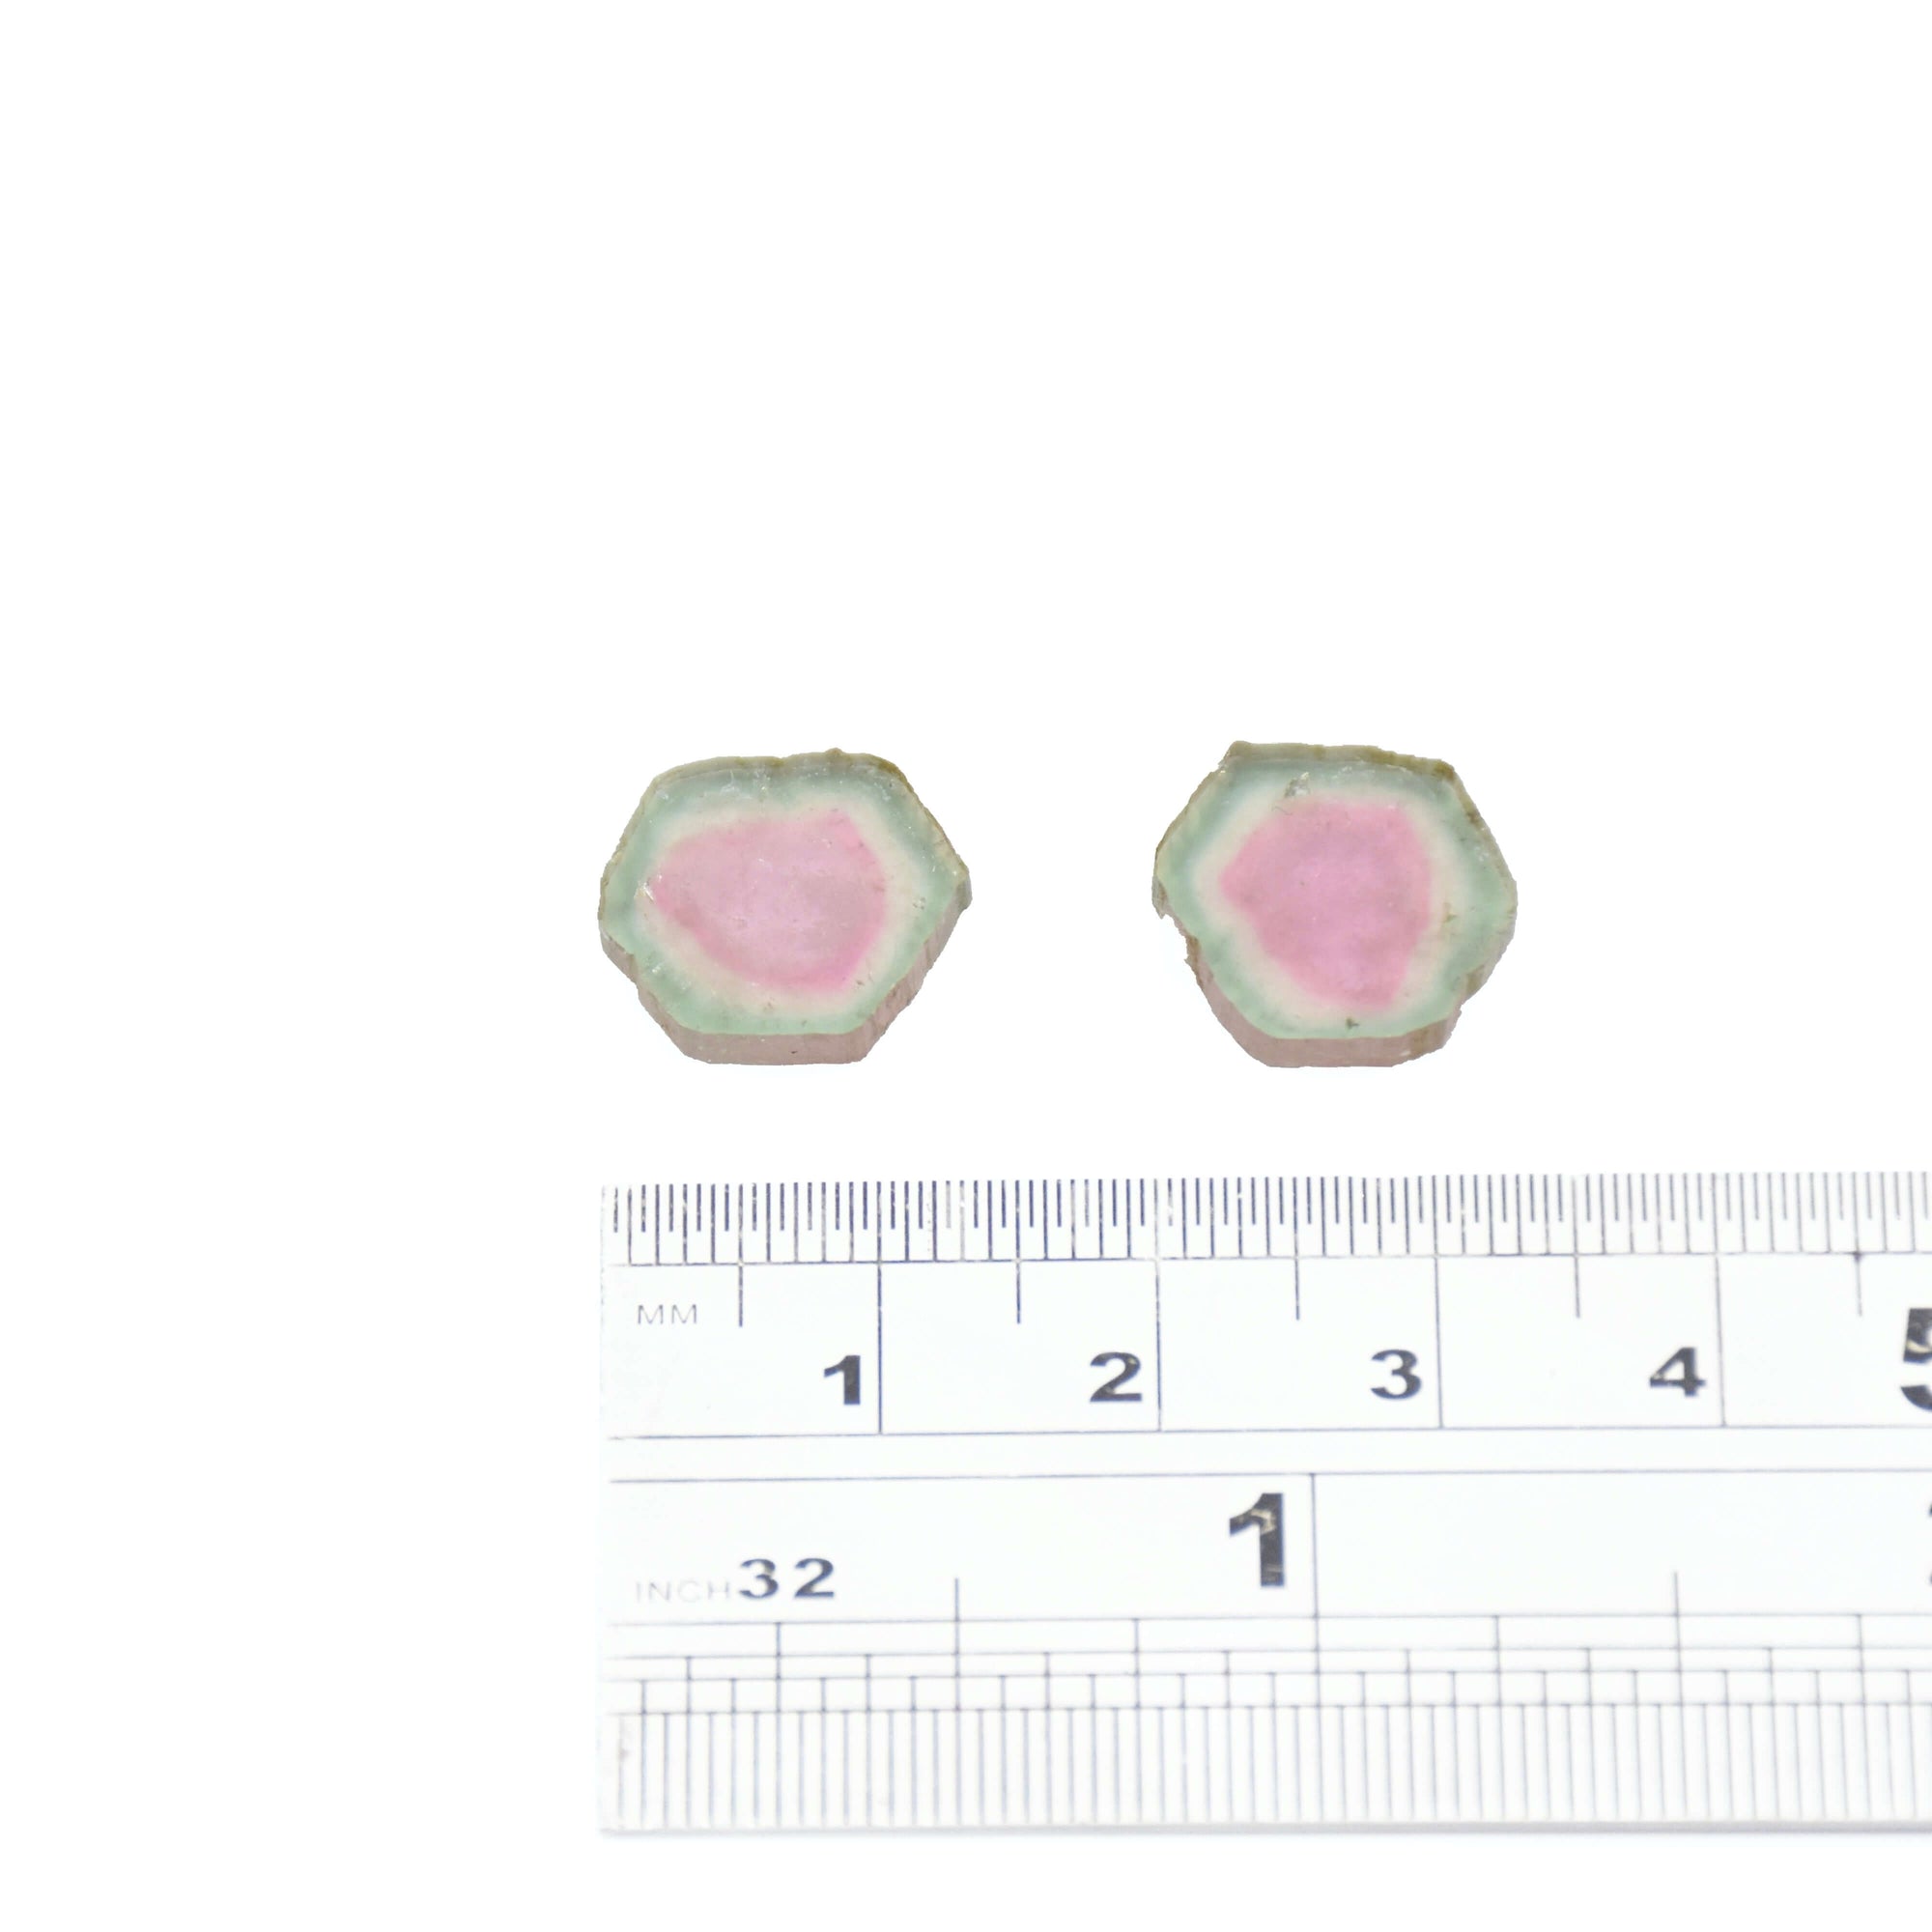 A beautiful pair of watermelon tourmaline gems for custom jewelry